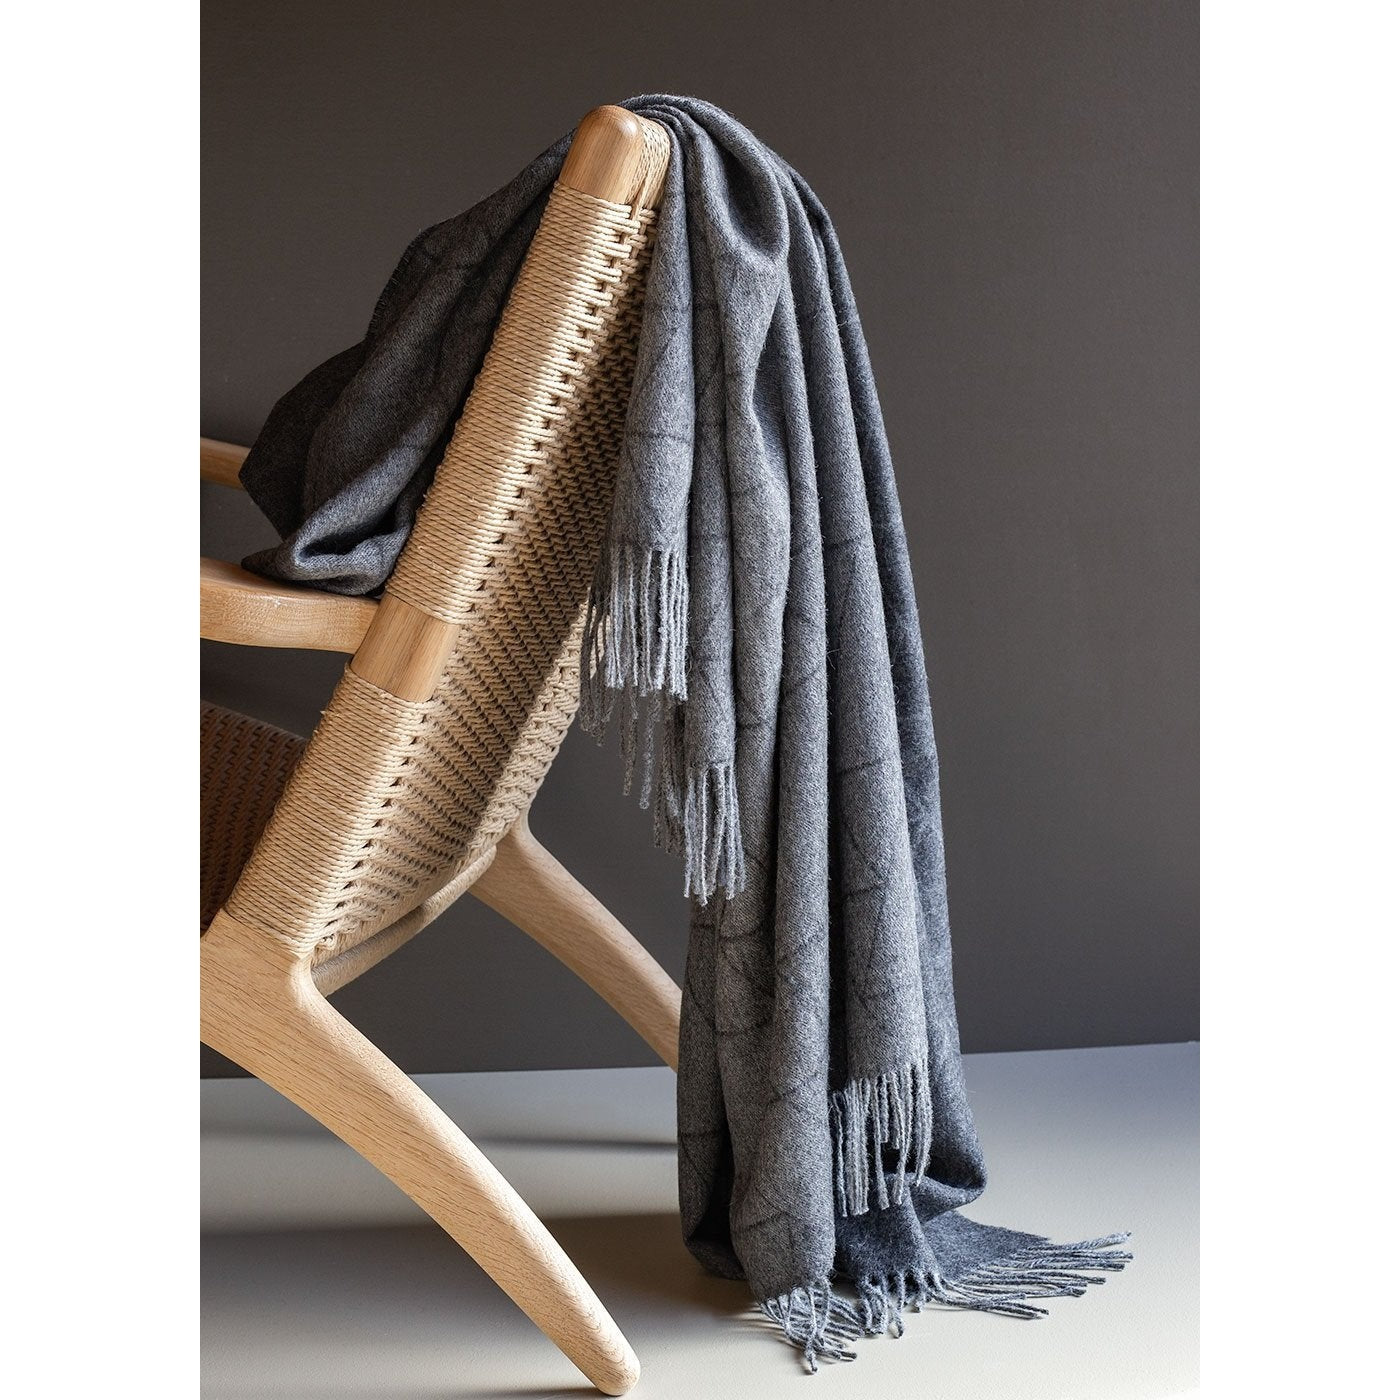 Architectmade Couvre-lit de motif finin juhl, gris